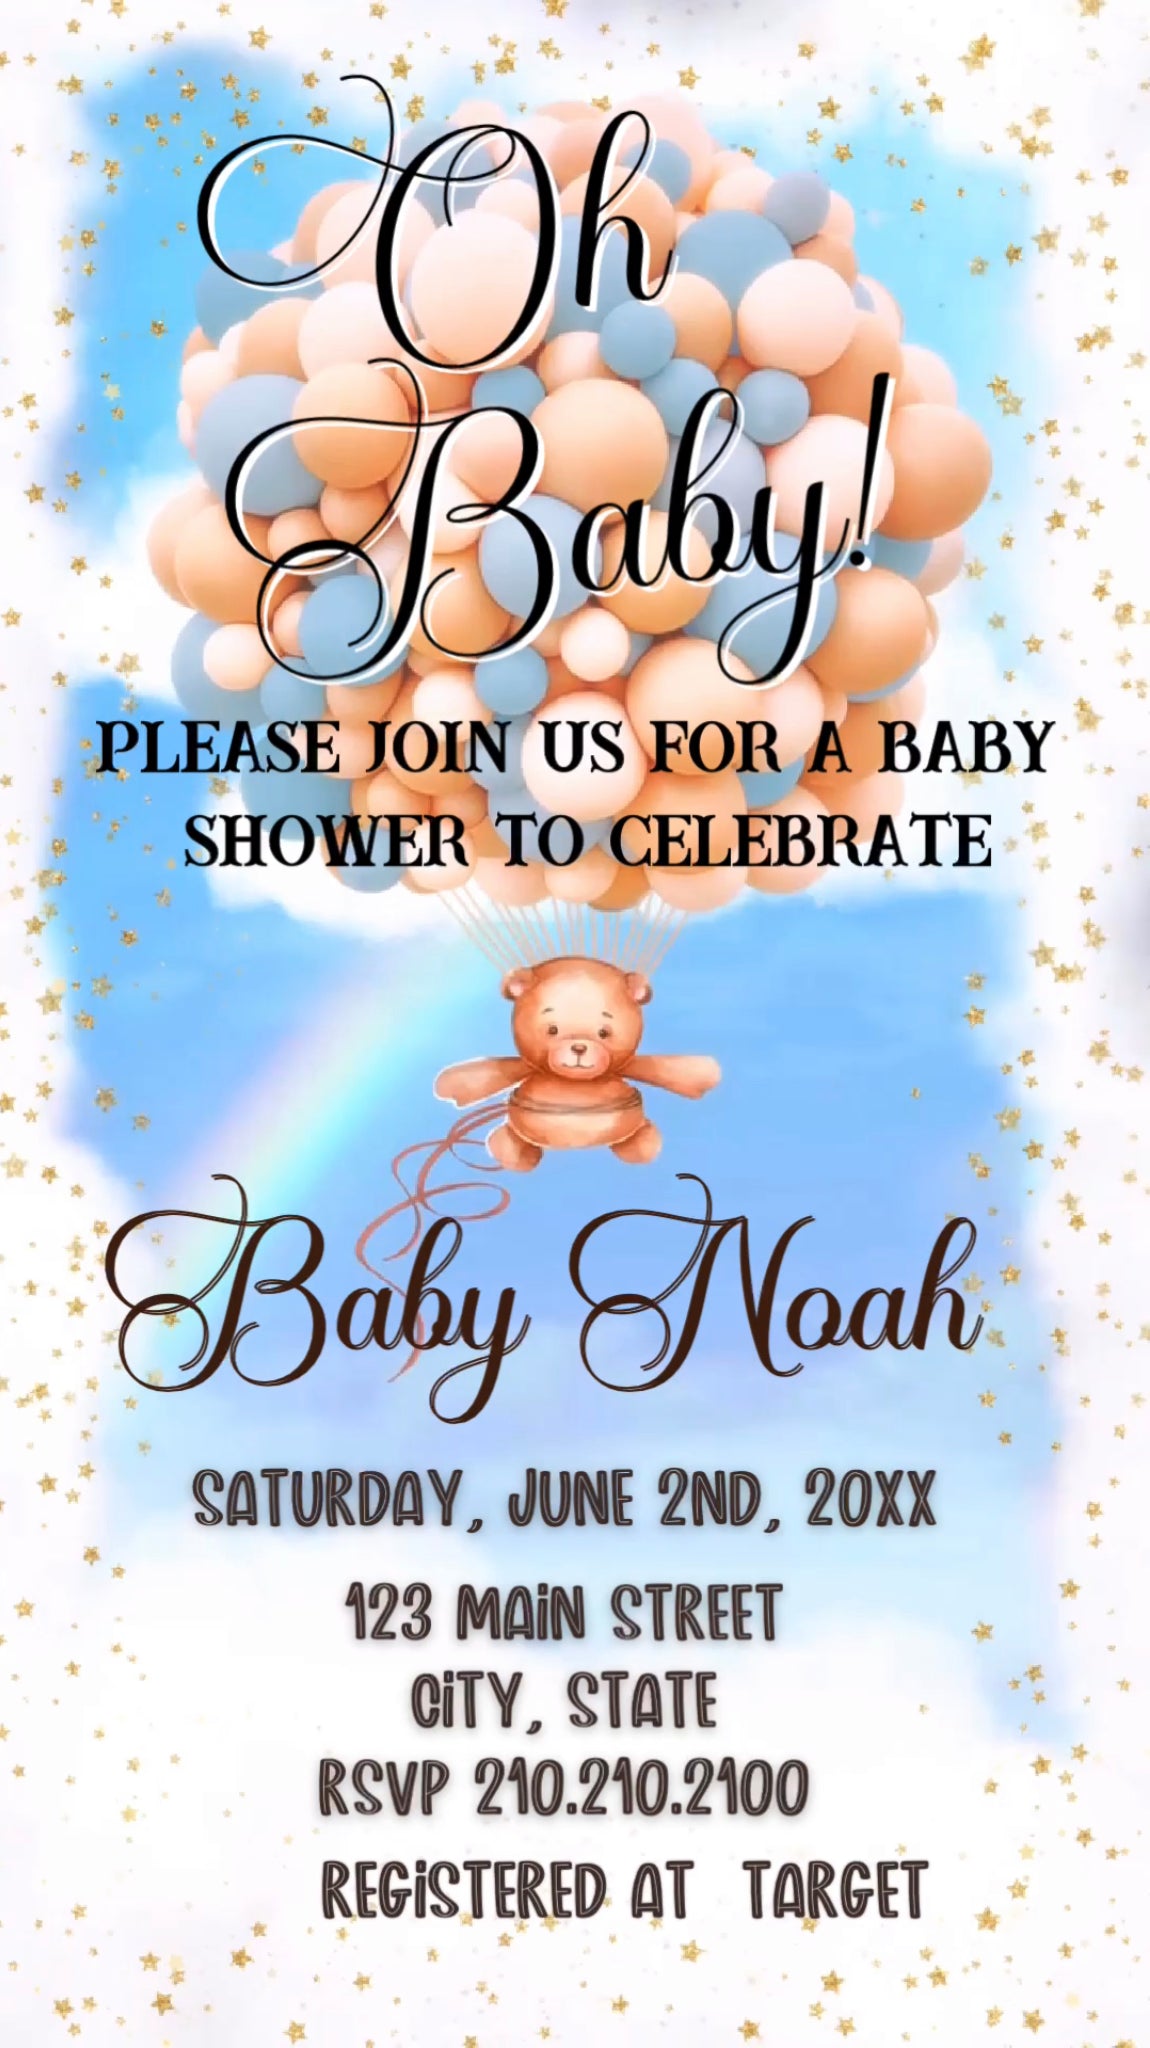 Blue balloons Baby Shower Video Invite